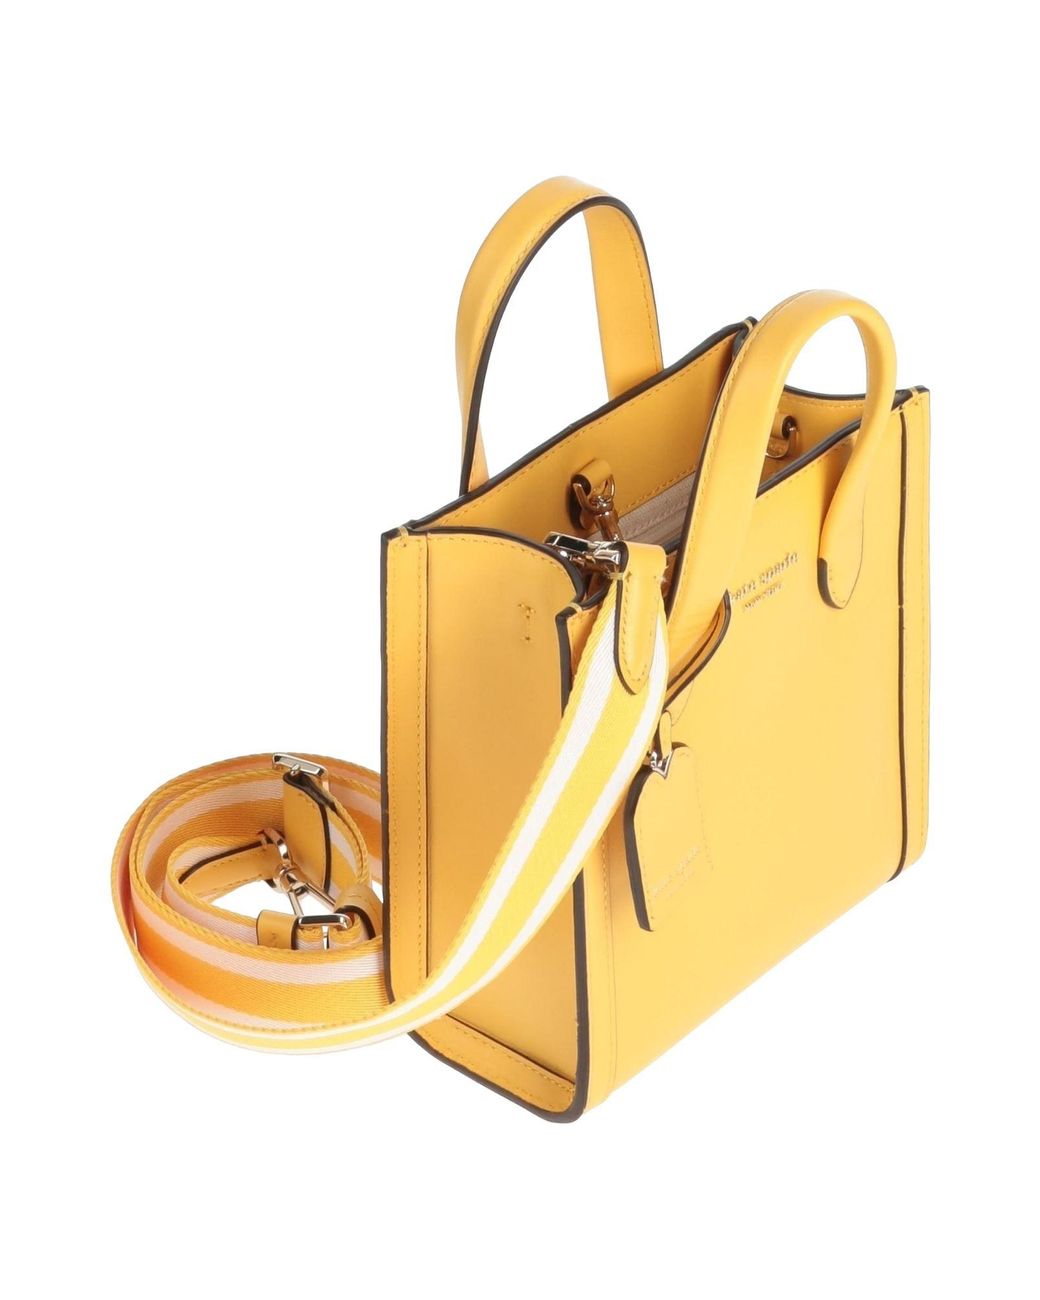 Kate Spade Grab Small Bucket Bag Yellow Leather PXR00420 NWT $298 Shoulder  FS | eBay